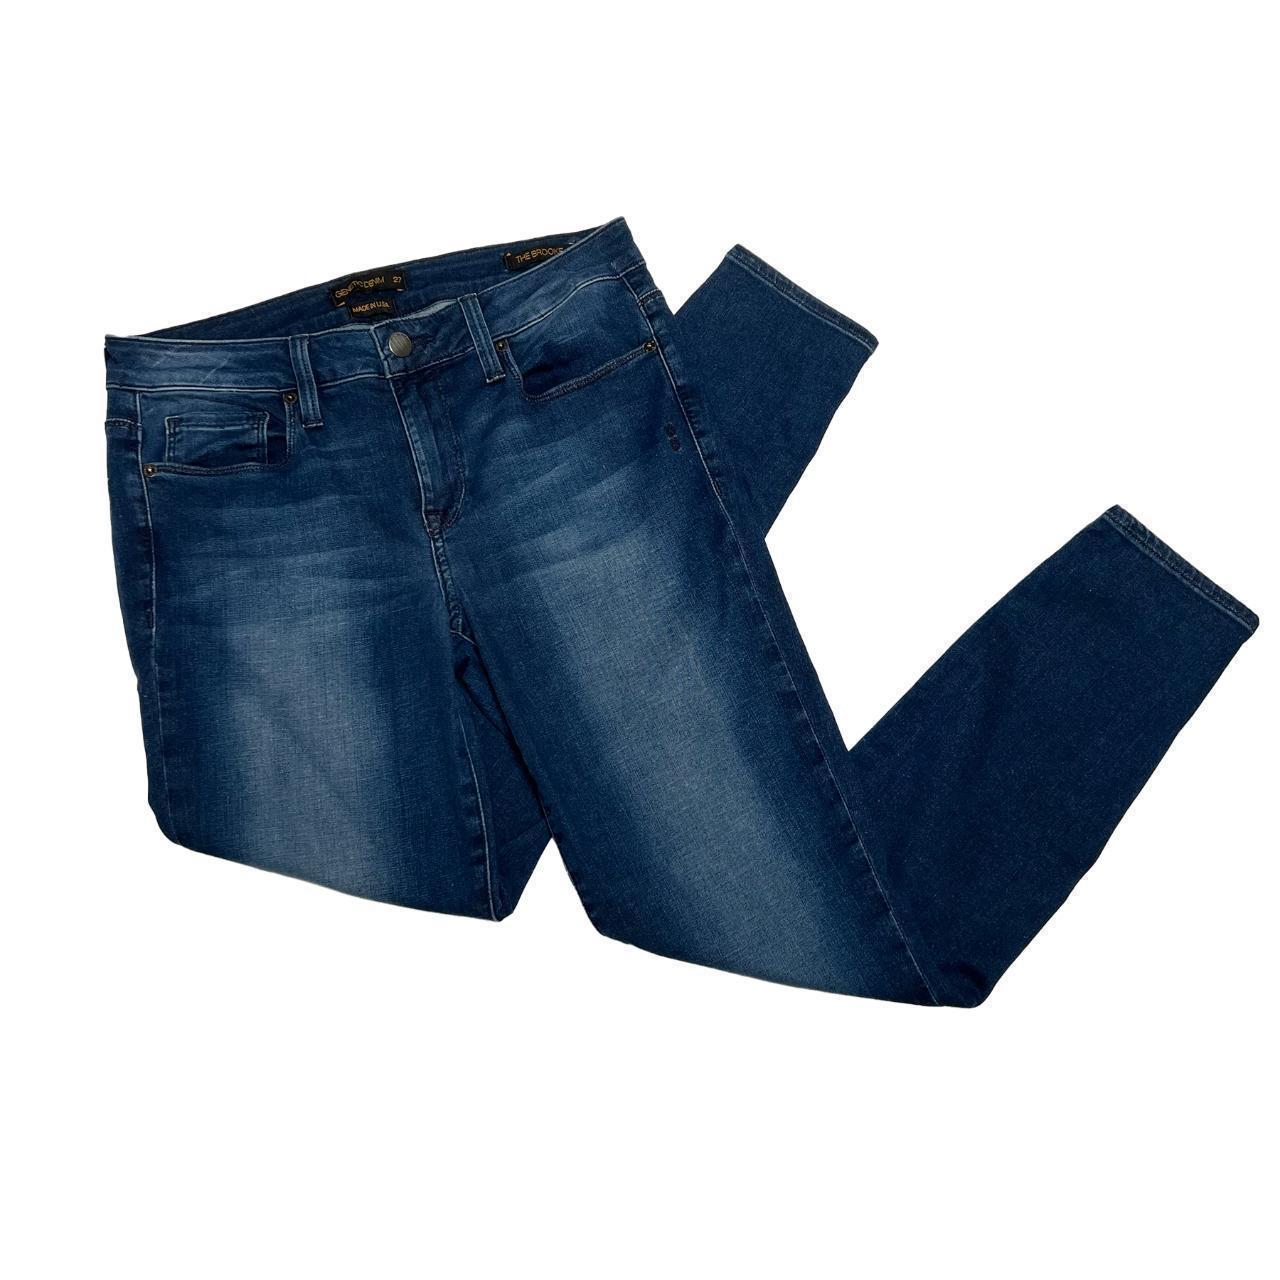 Genetic Denim Boho Style jeans | Boho style jeans, Boho fashion, Jeans style